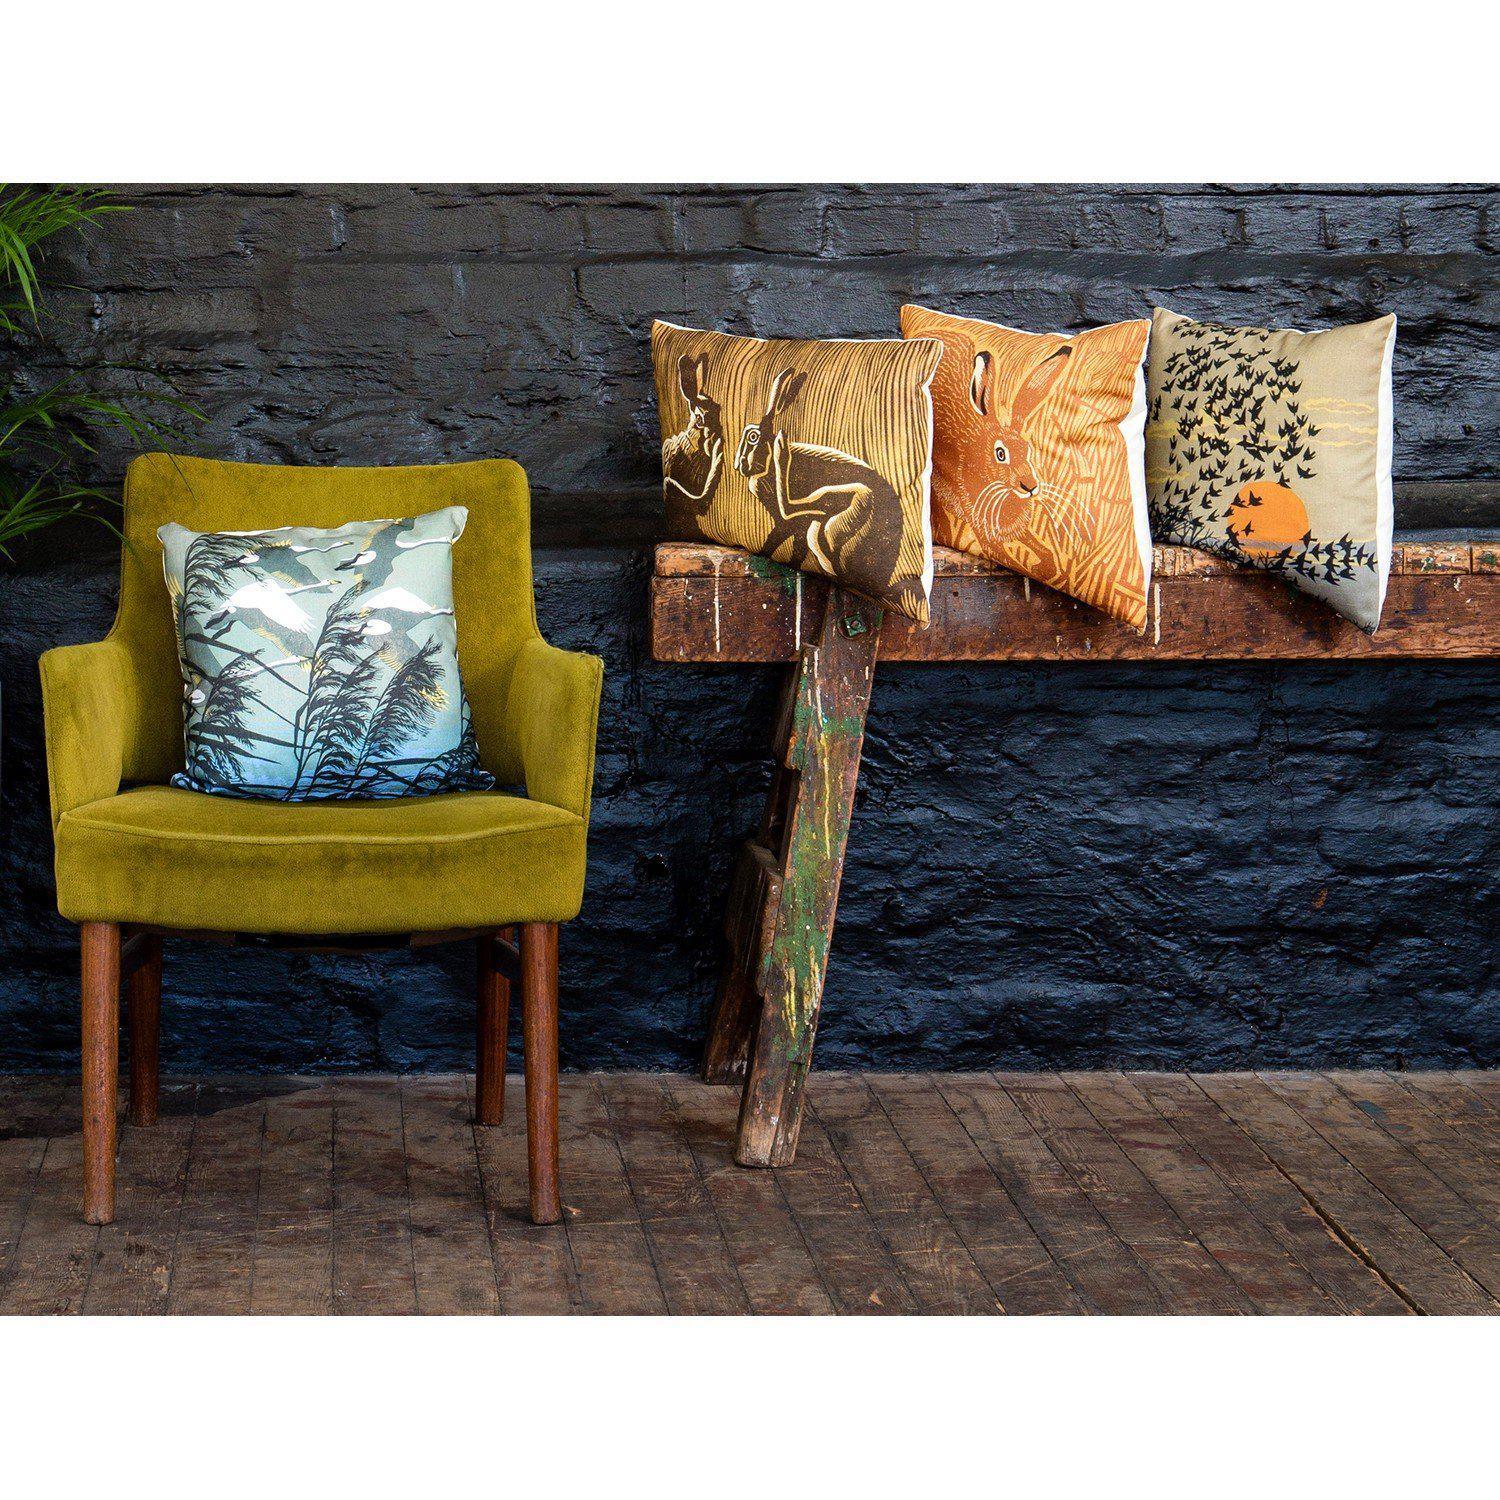 Redwings - Robert Gillmor Cushion - Handmade Cushions UK - WeLoveCushions